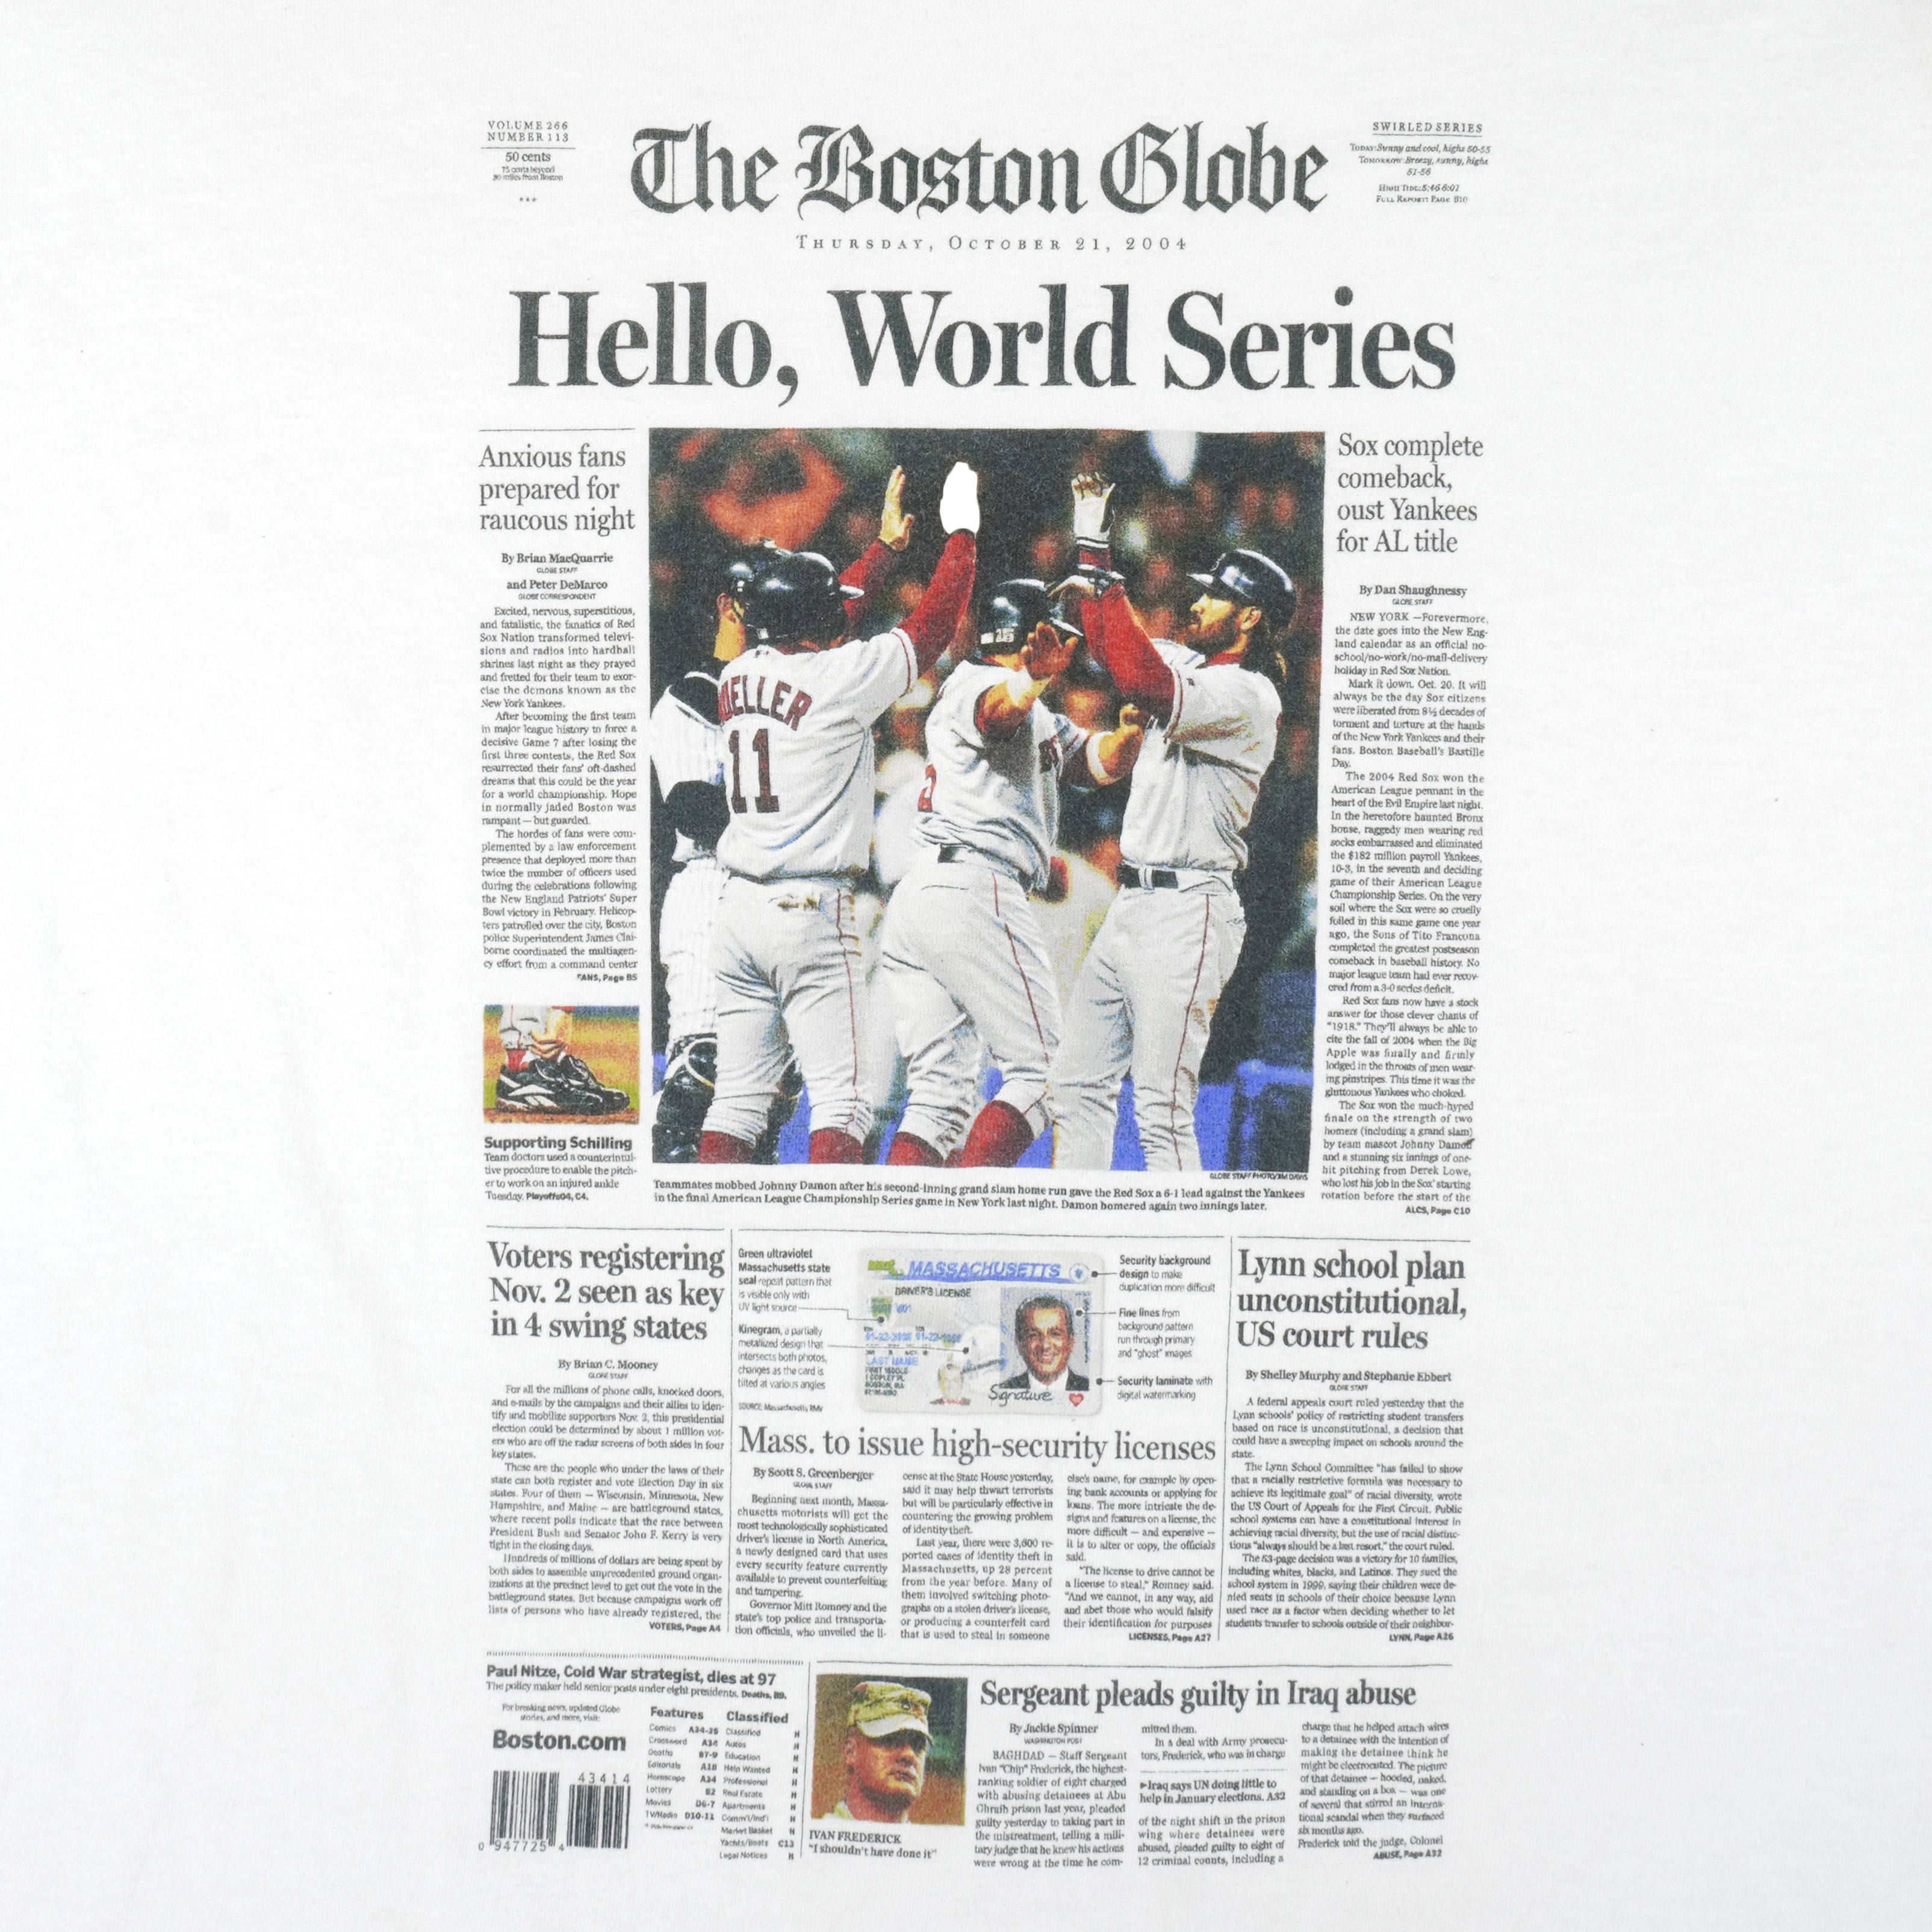 2004 Boston Red Sox World Series Champions Baseball MLB T Shirt Size L Anvil